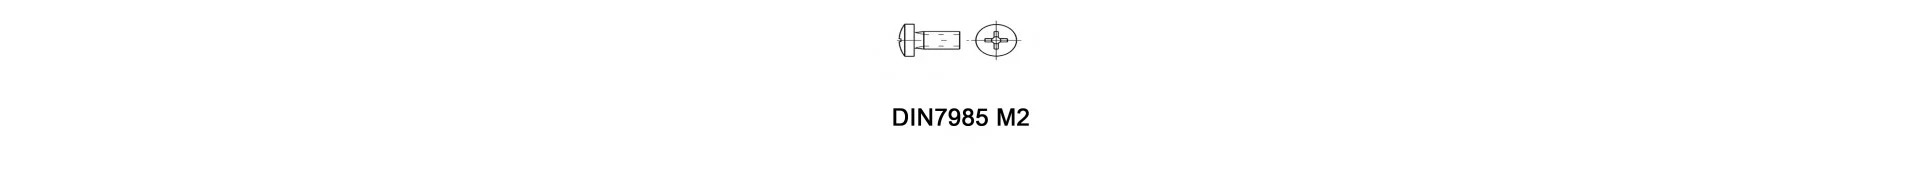 DIN7985 M2